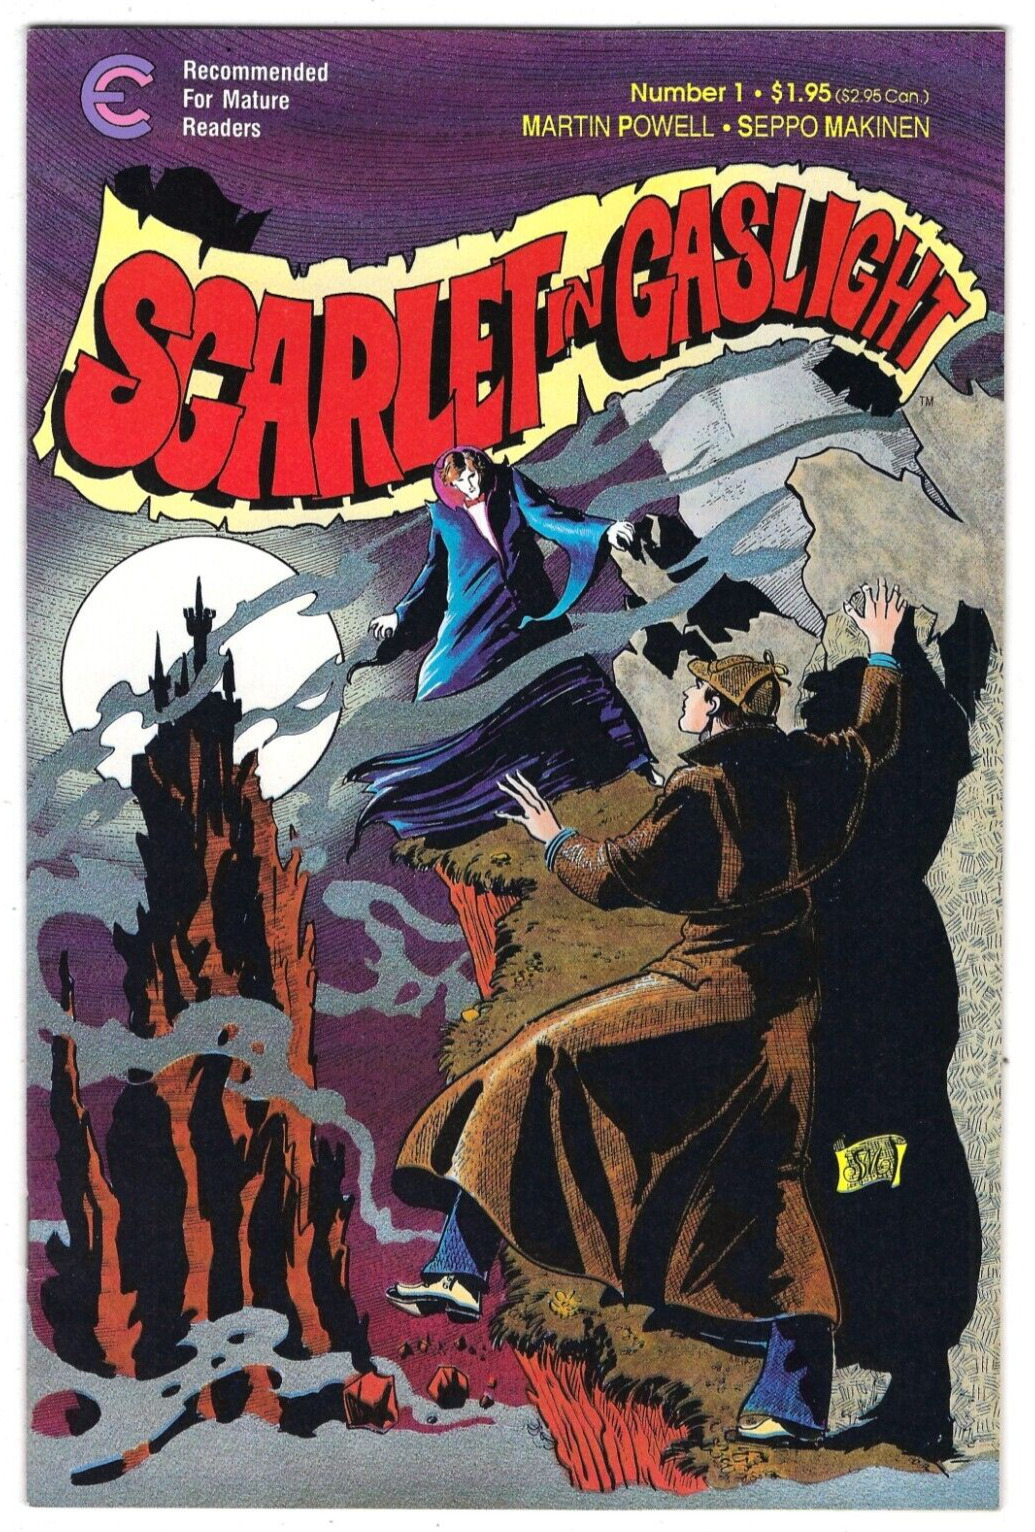 Eternity Comics SCARLET IN GASLIGHT #1 first printing Sherlock Holmes